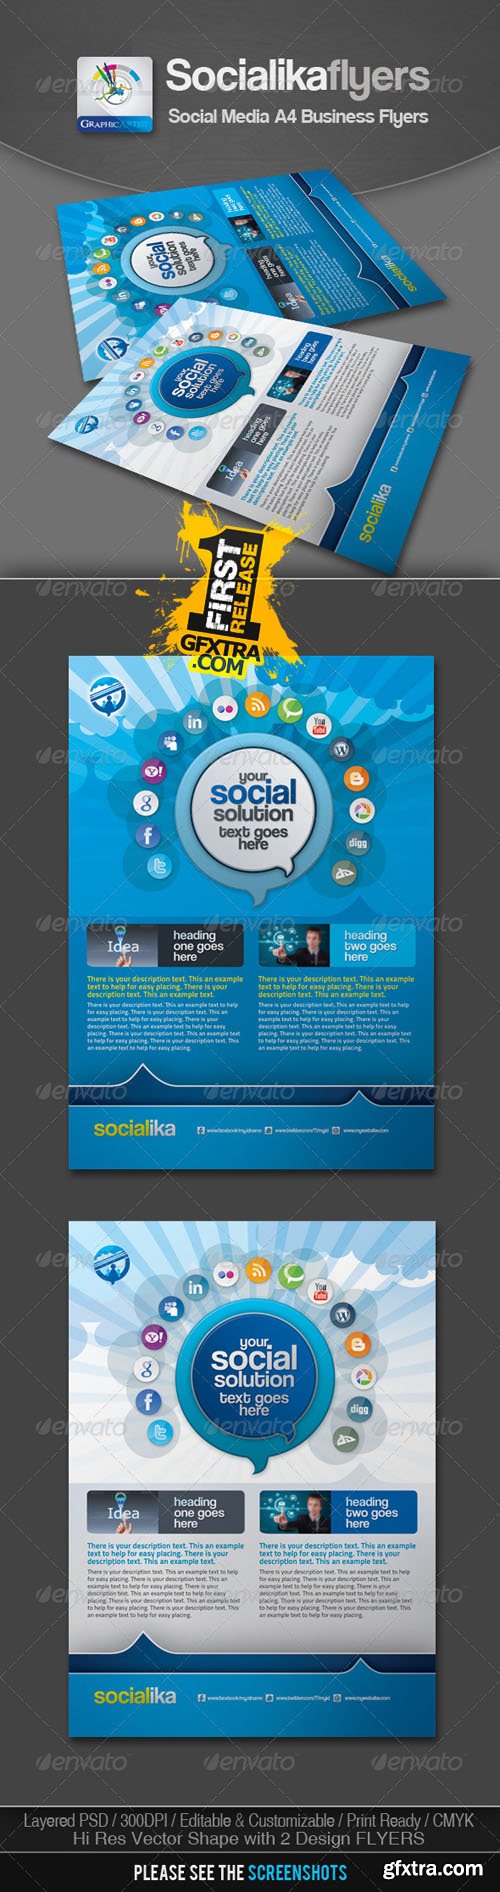 GraphicRiver Socialika Social Media Business Flyers 2687564